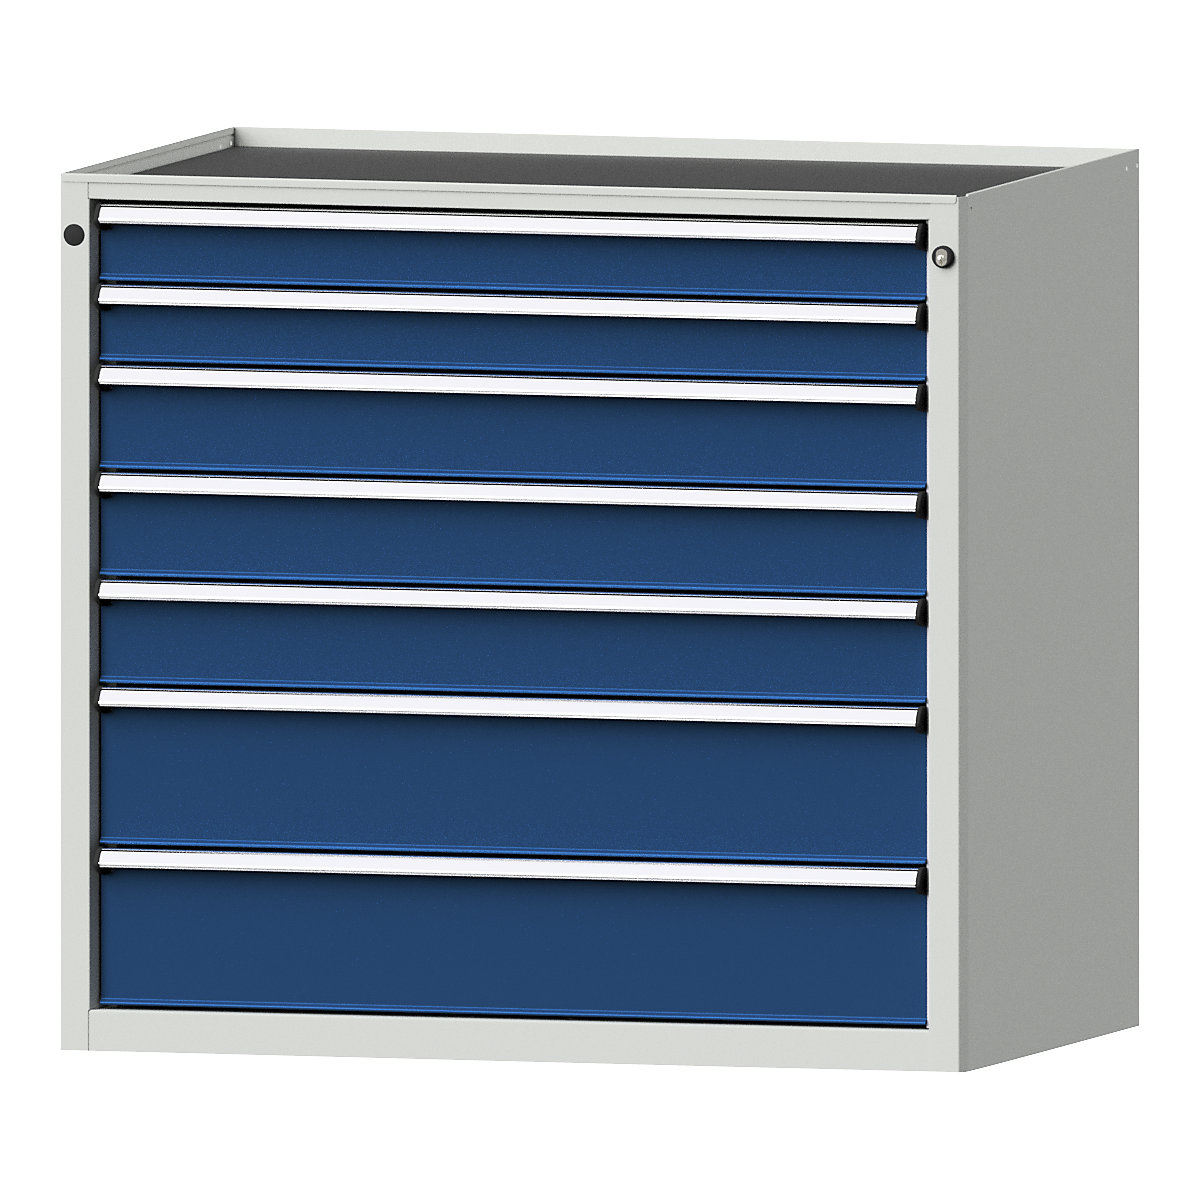 Armoire à tiroirs – ANKE, l x p 1060 x 675 mm, 7 tiroirs, hauteur 980 mm, façade bleu gentiane-10